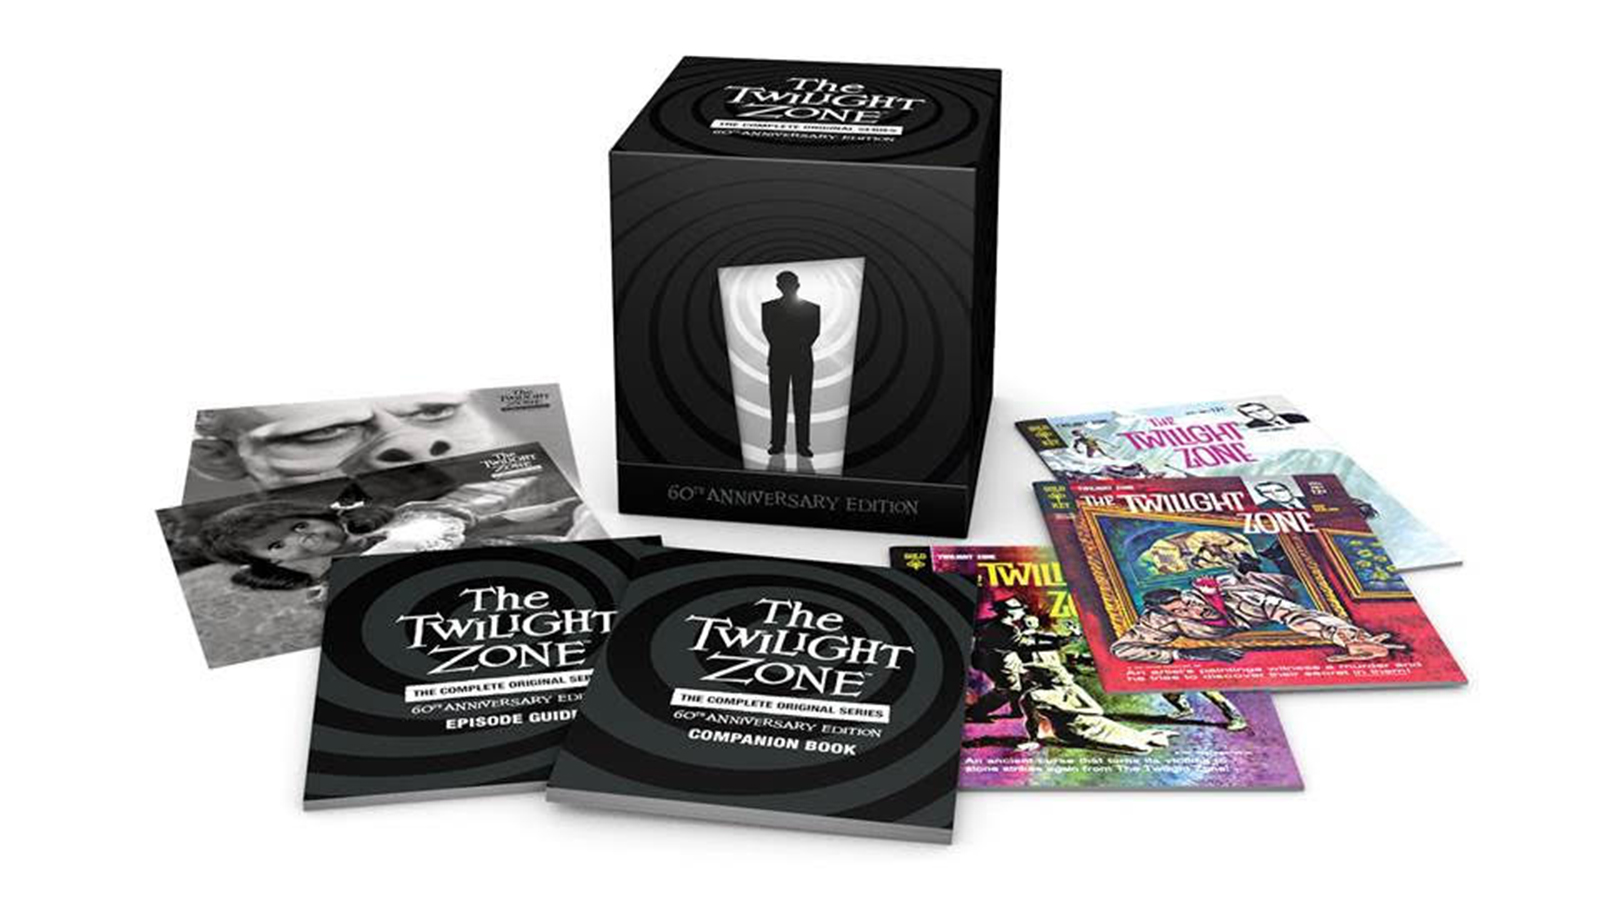 Original The Twilight Zone Series Getting a Brand New Blu-ray